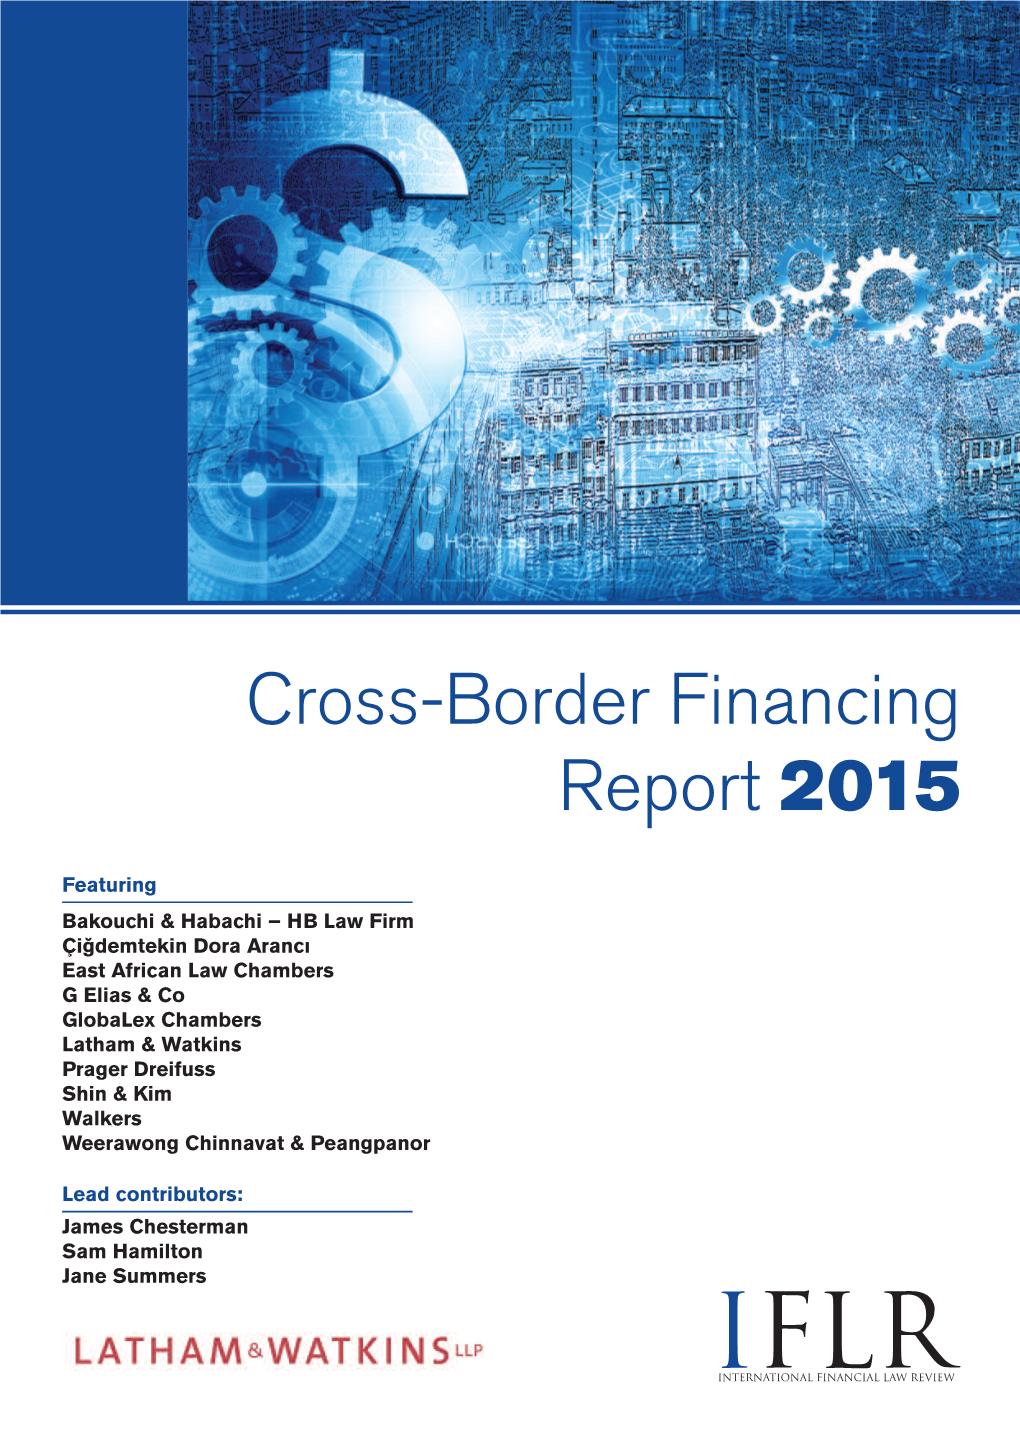 Cross-Border Financing Report 2015